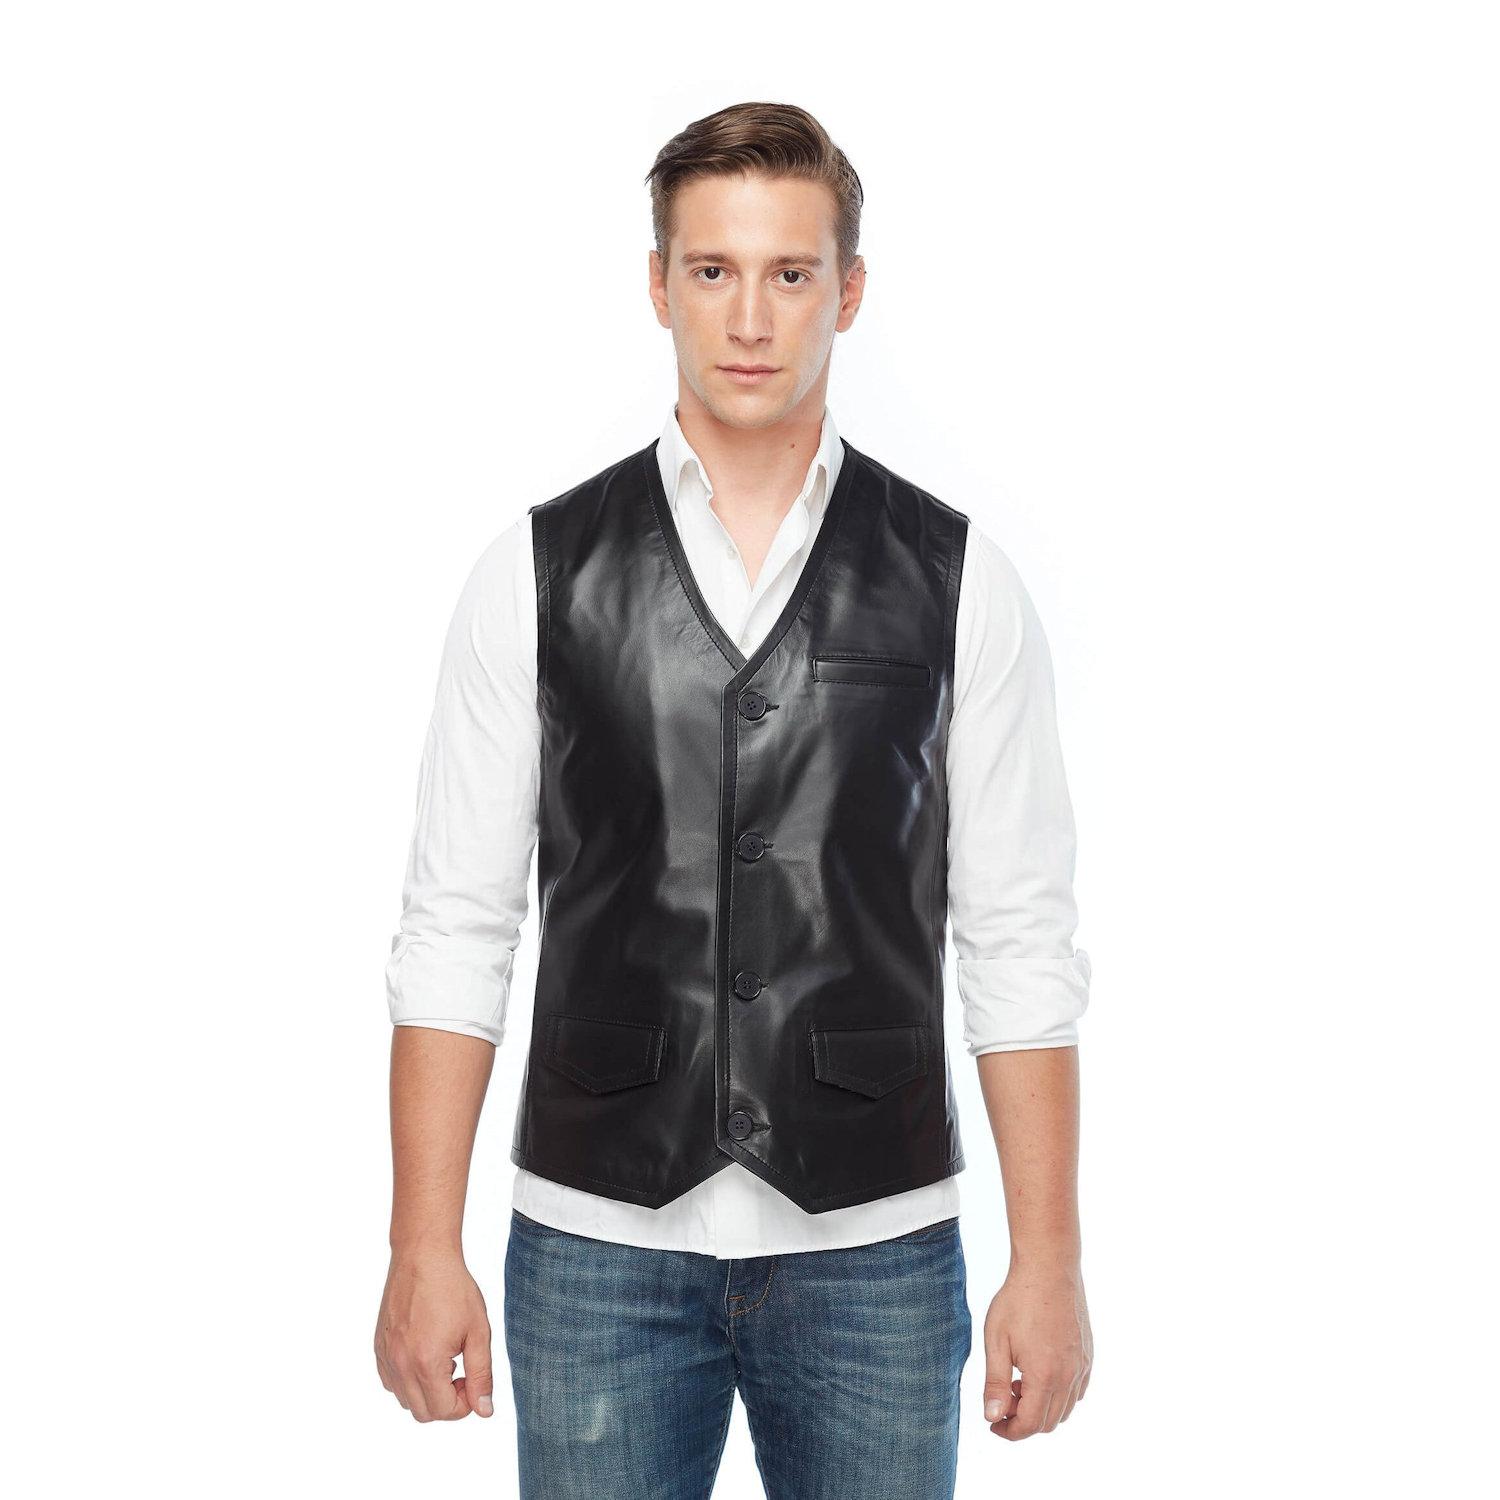 Deriza Pocket Genuine Leather Vest